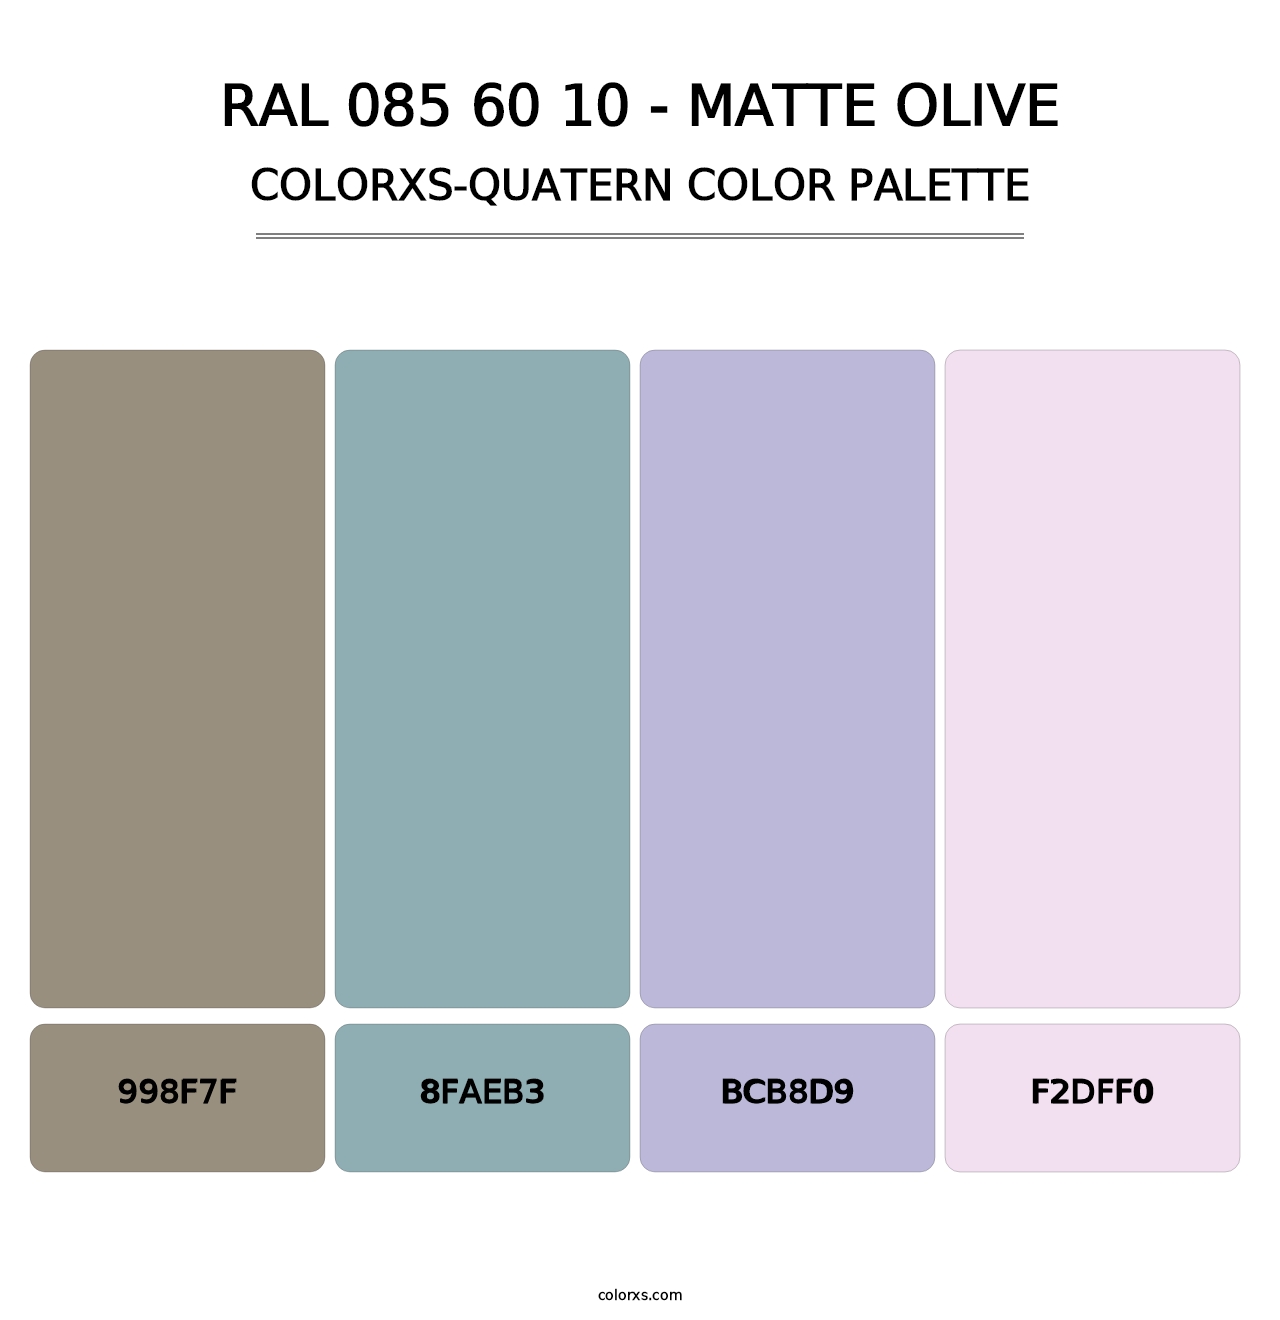 RAL 085 60 10 - Matte Olive - Colorxs Quatern Palette